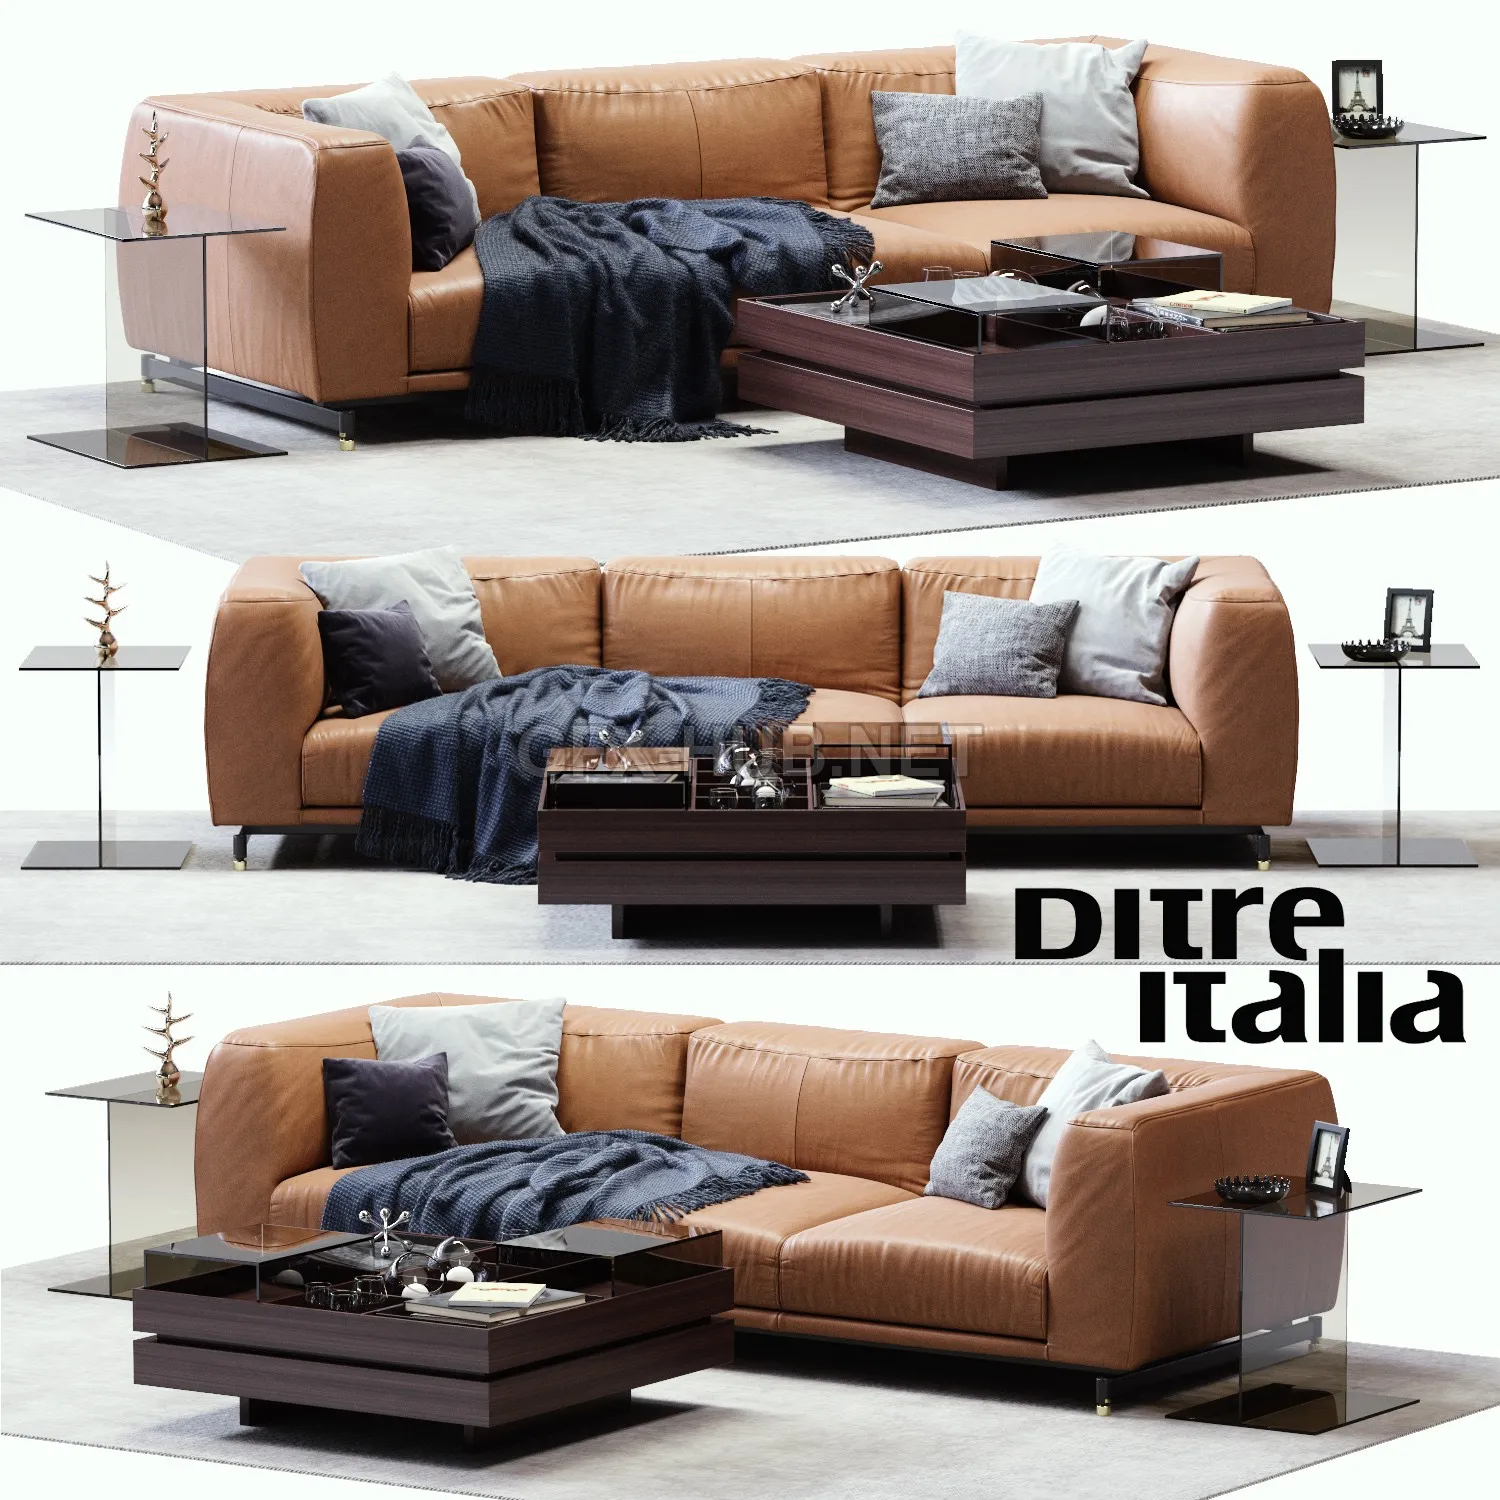 FURNITURE 3D MODELS – DITRE ITALIA St. Germain Leather Sofa